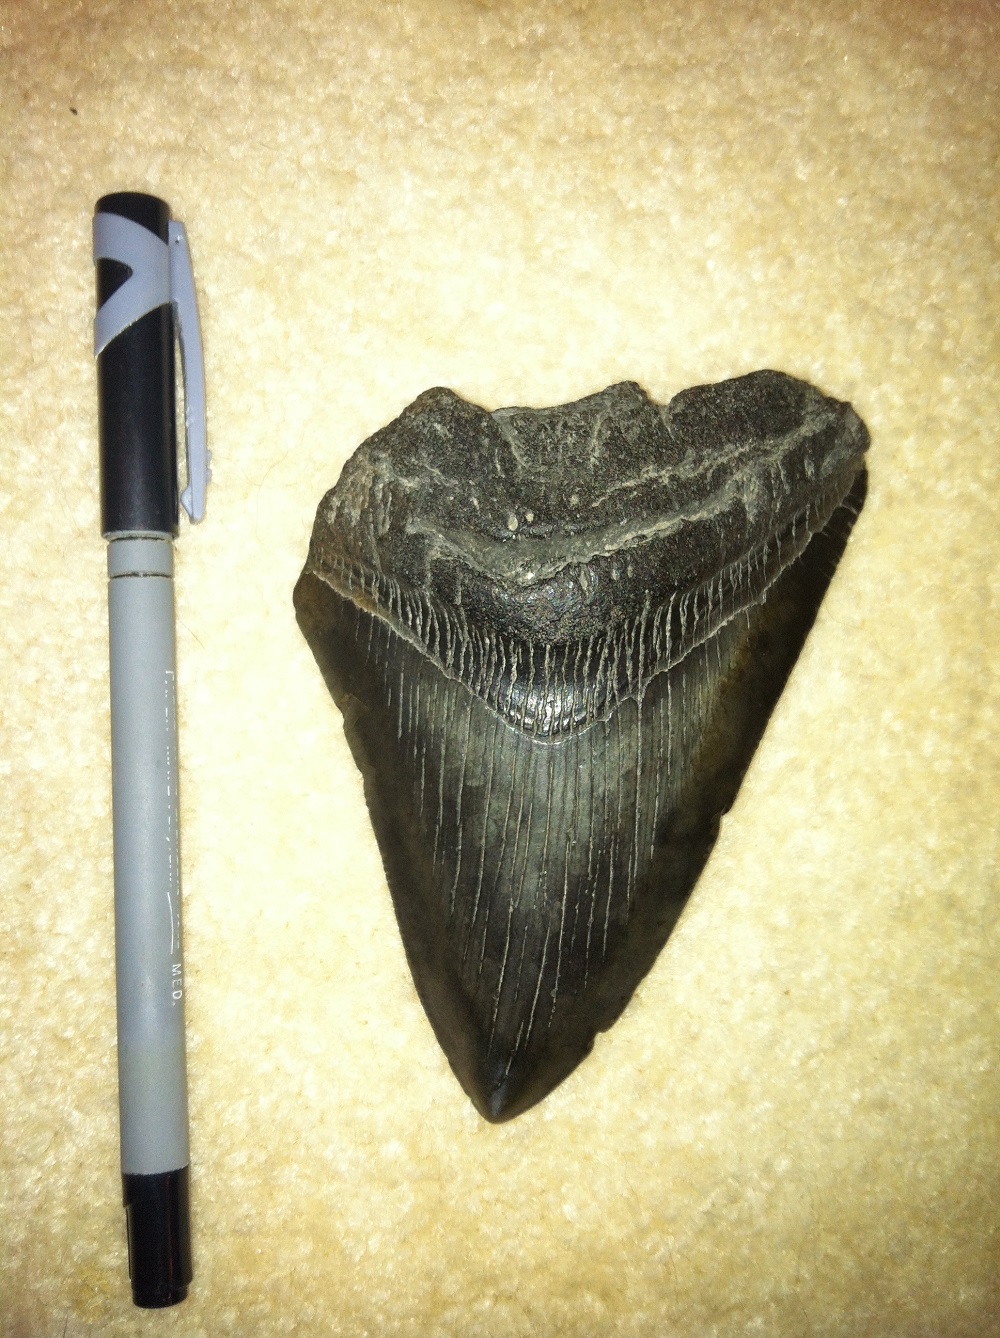 Megalodon tooth next to a pen